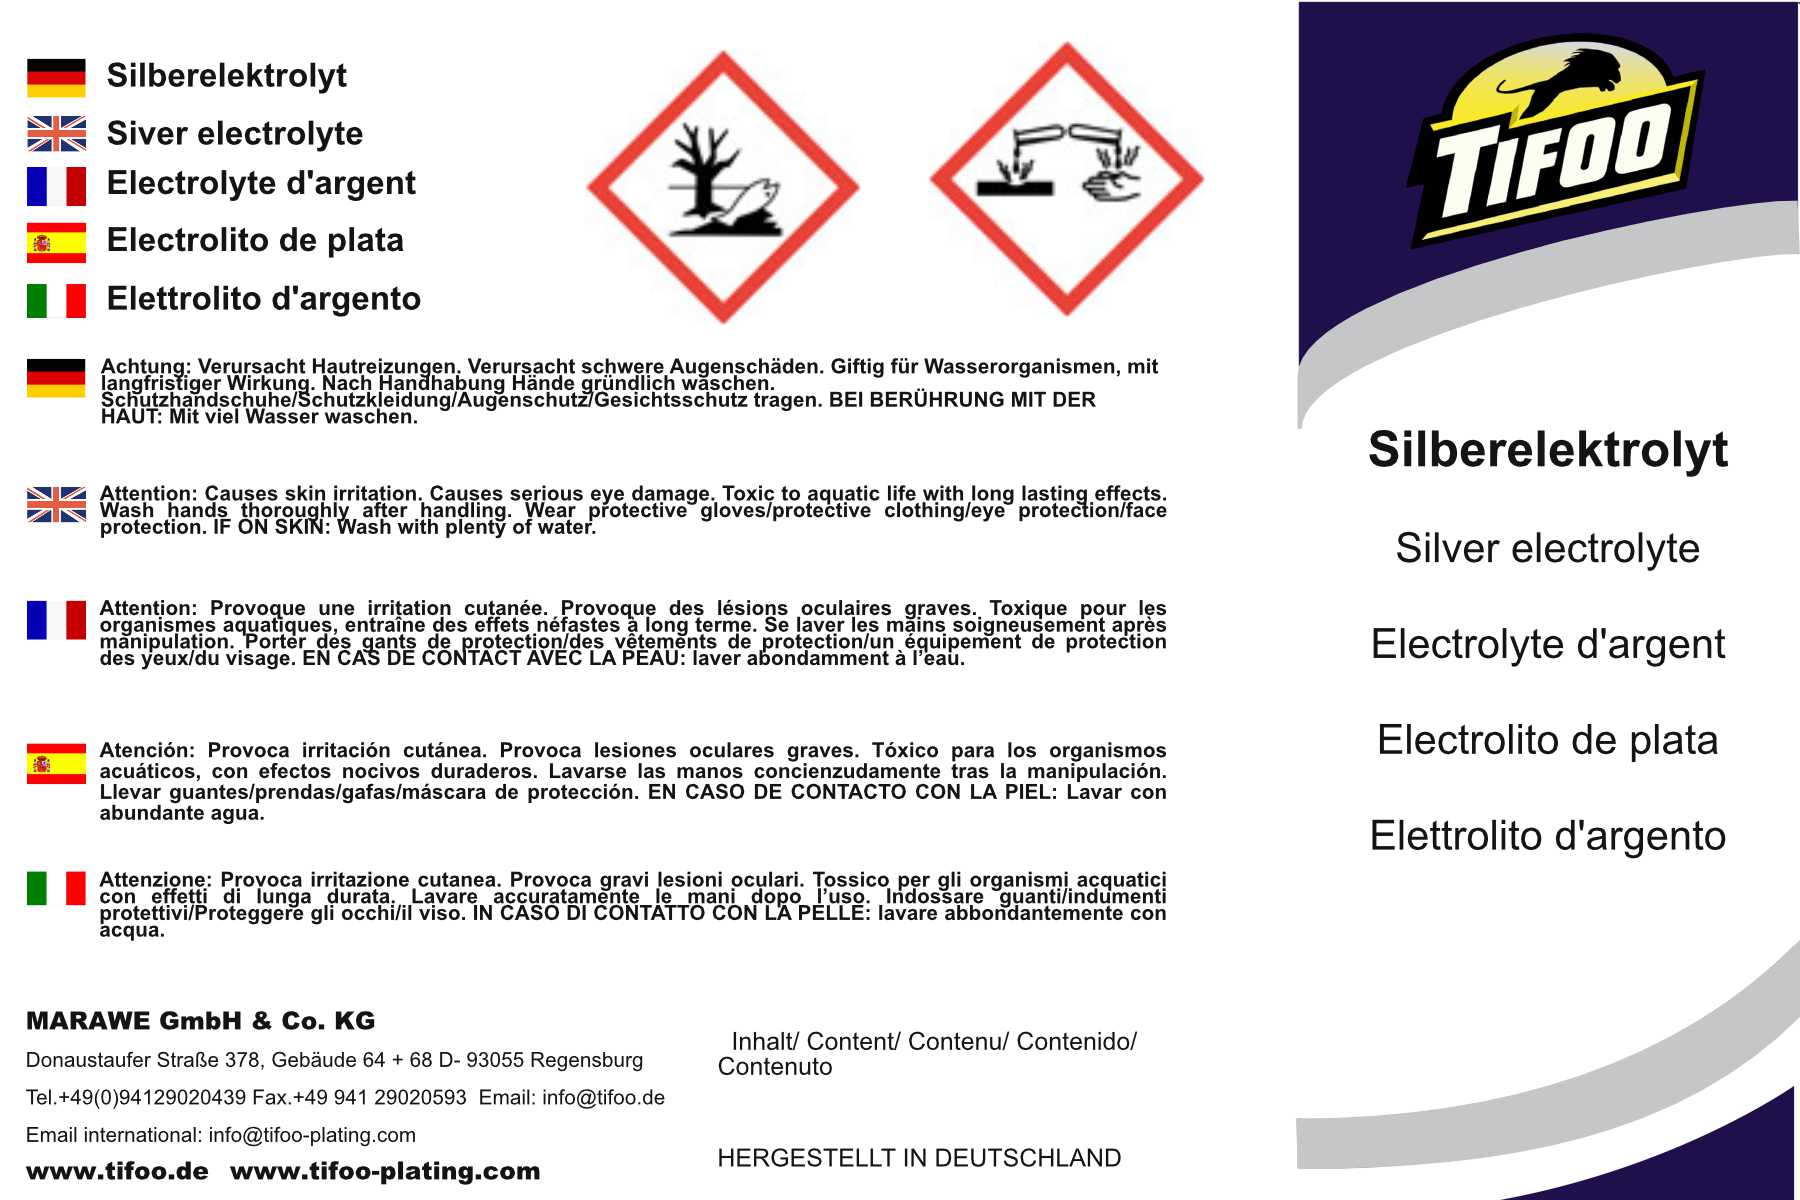 Avvisi di sicurezza per Elettrolita d'argento